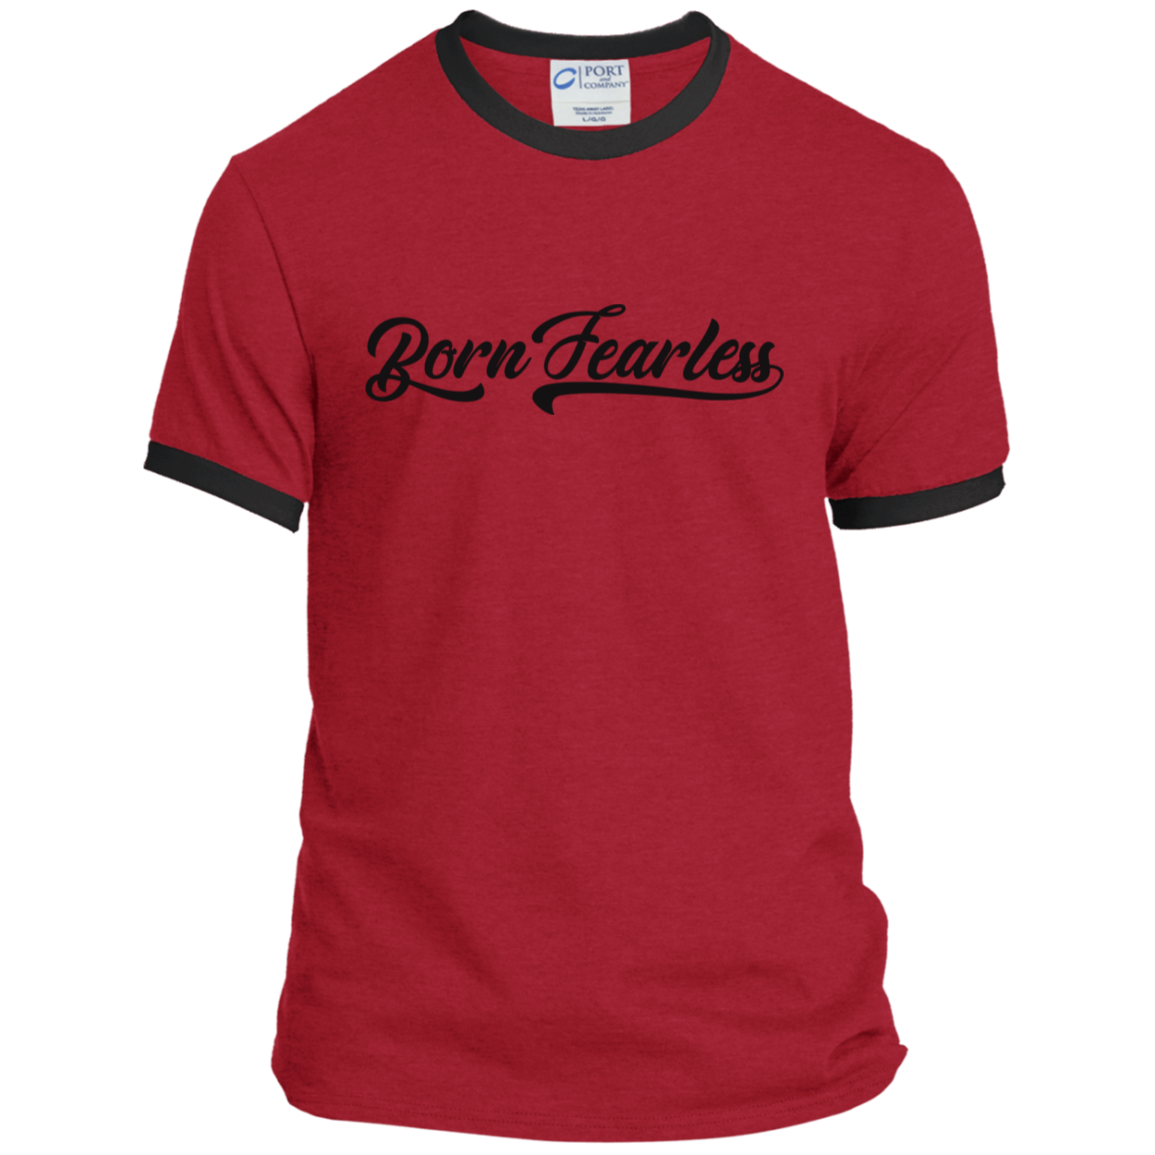 Born Fearless- Port & Co. Ringer Tee-shirt-men's wear